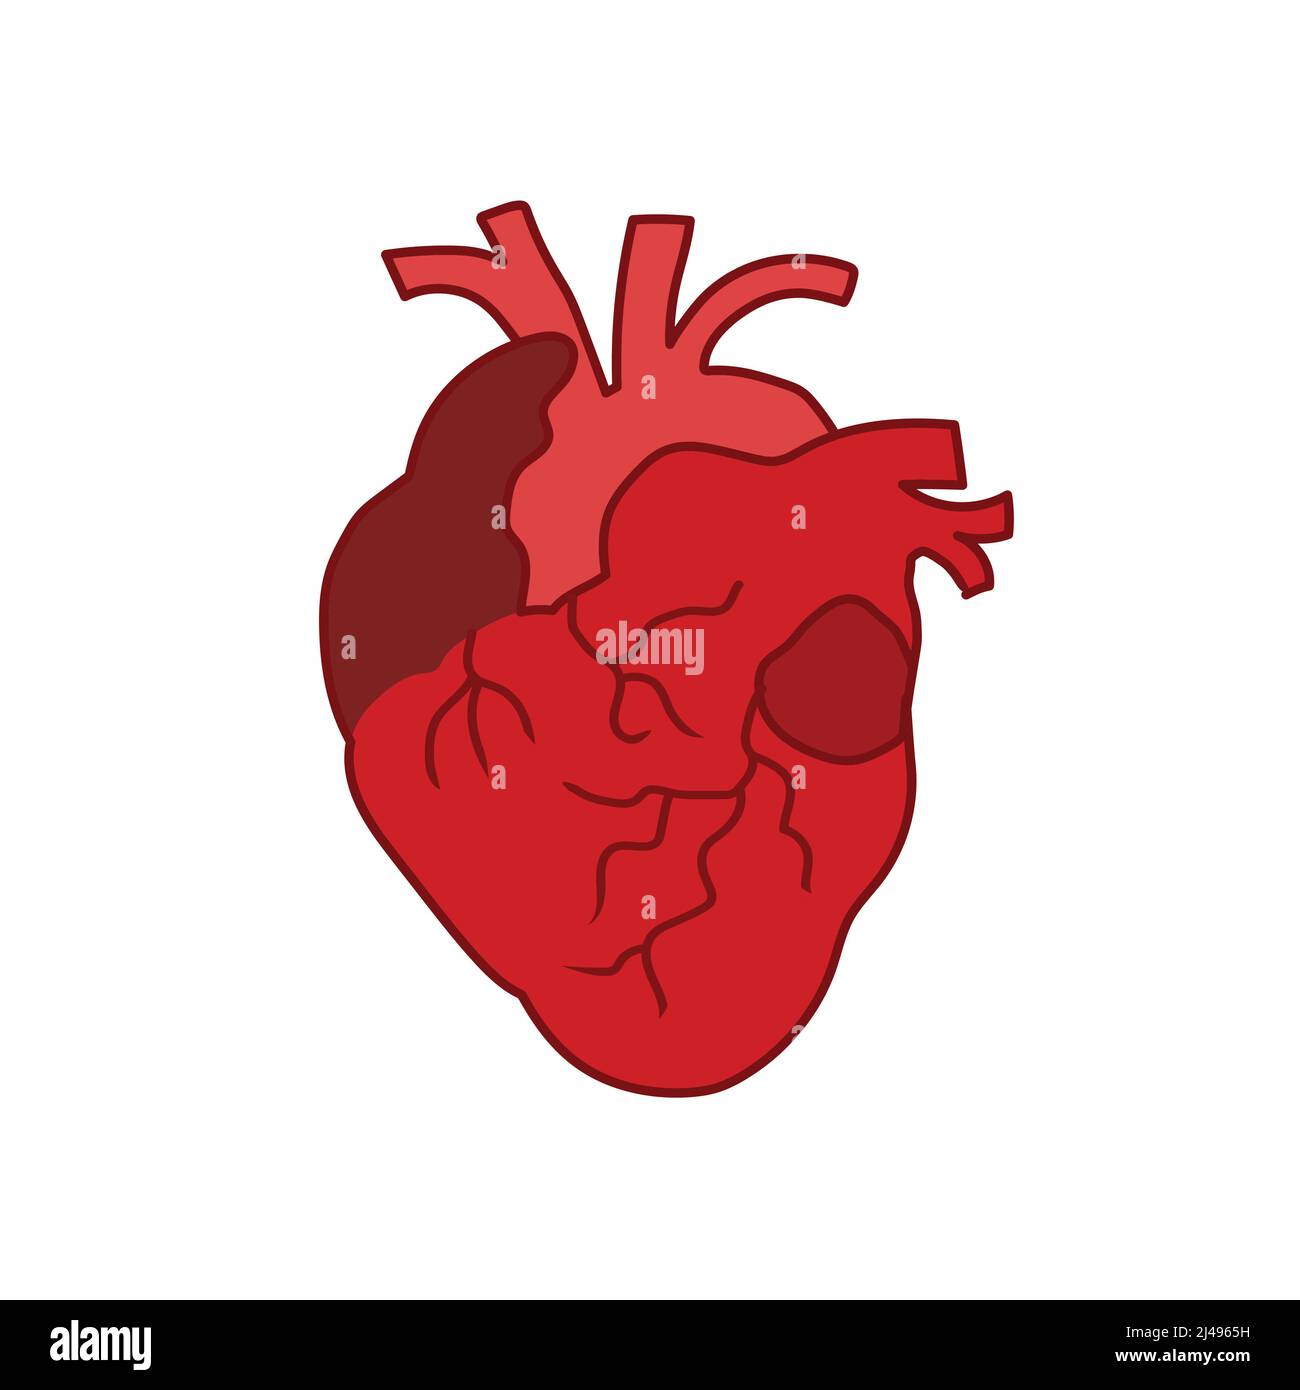 Human heart cardiac illustration isolated on white background Stock Vector